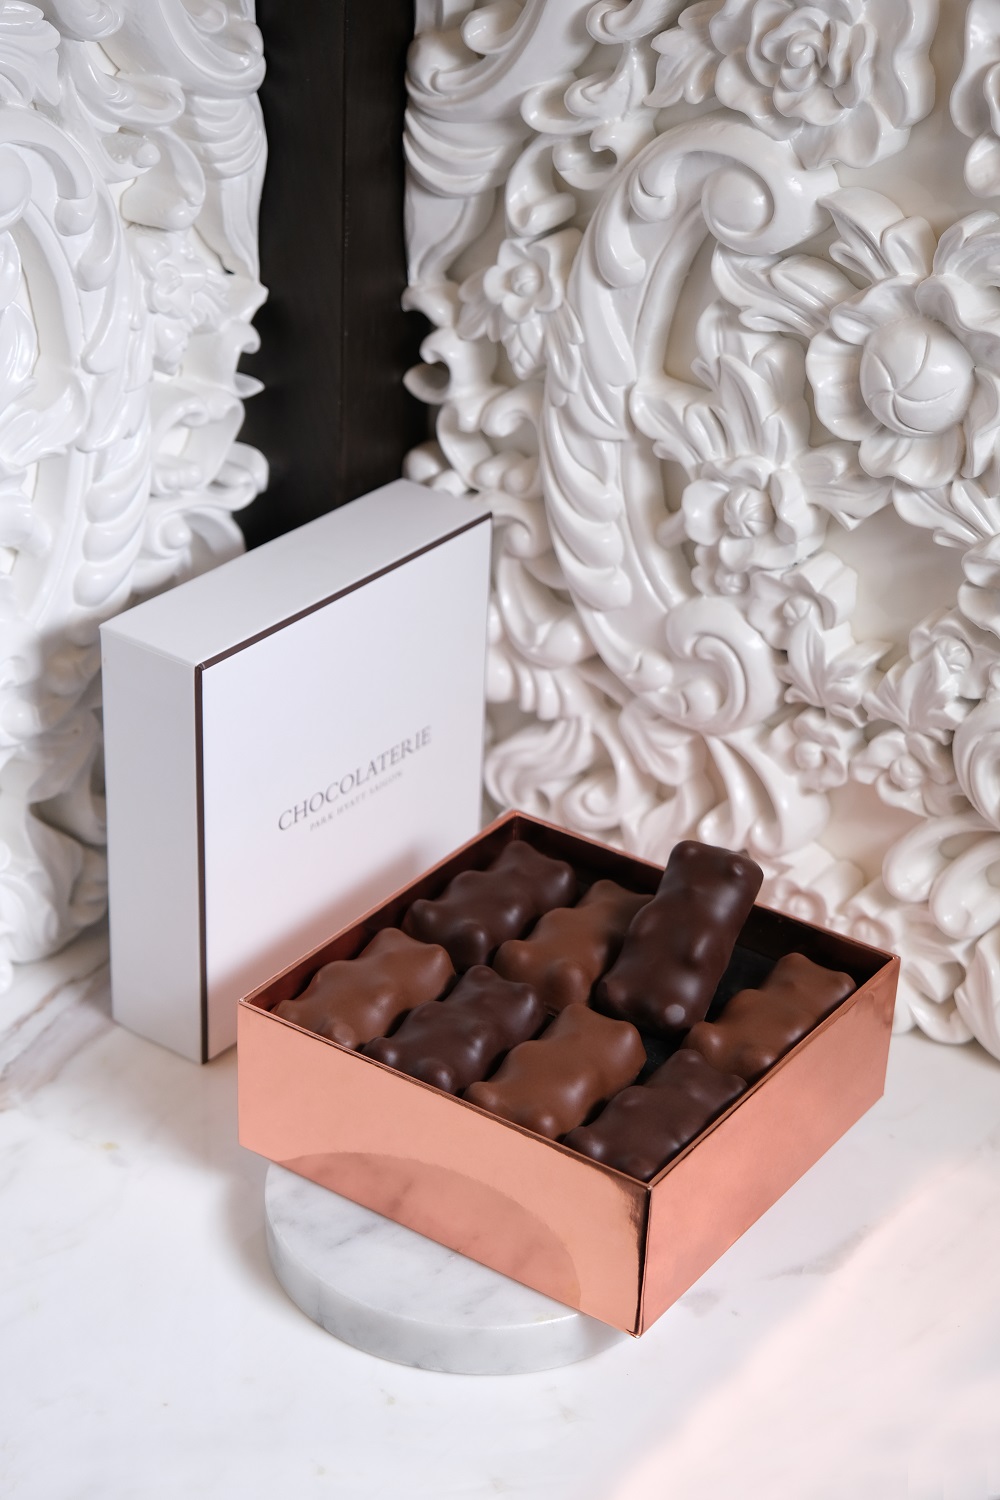 , Park Hyatt Saigon Launches Its First Ever Artisanal Chocolate Brand: Chocolaterie